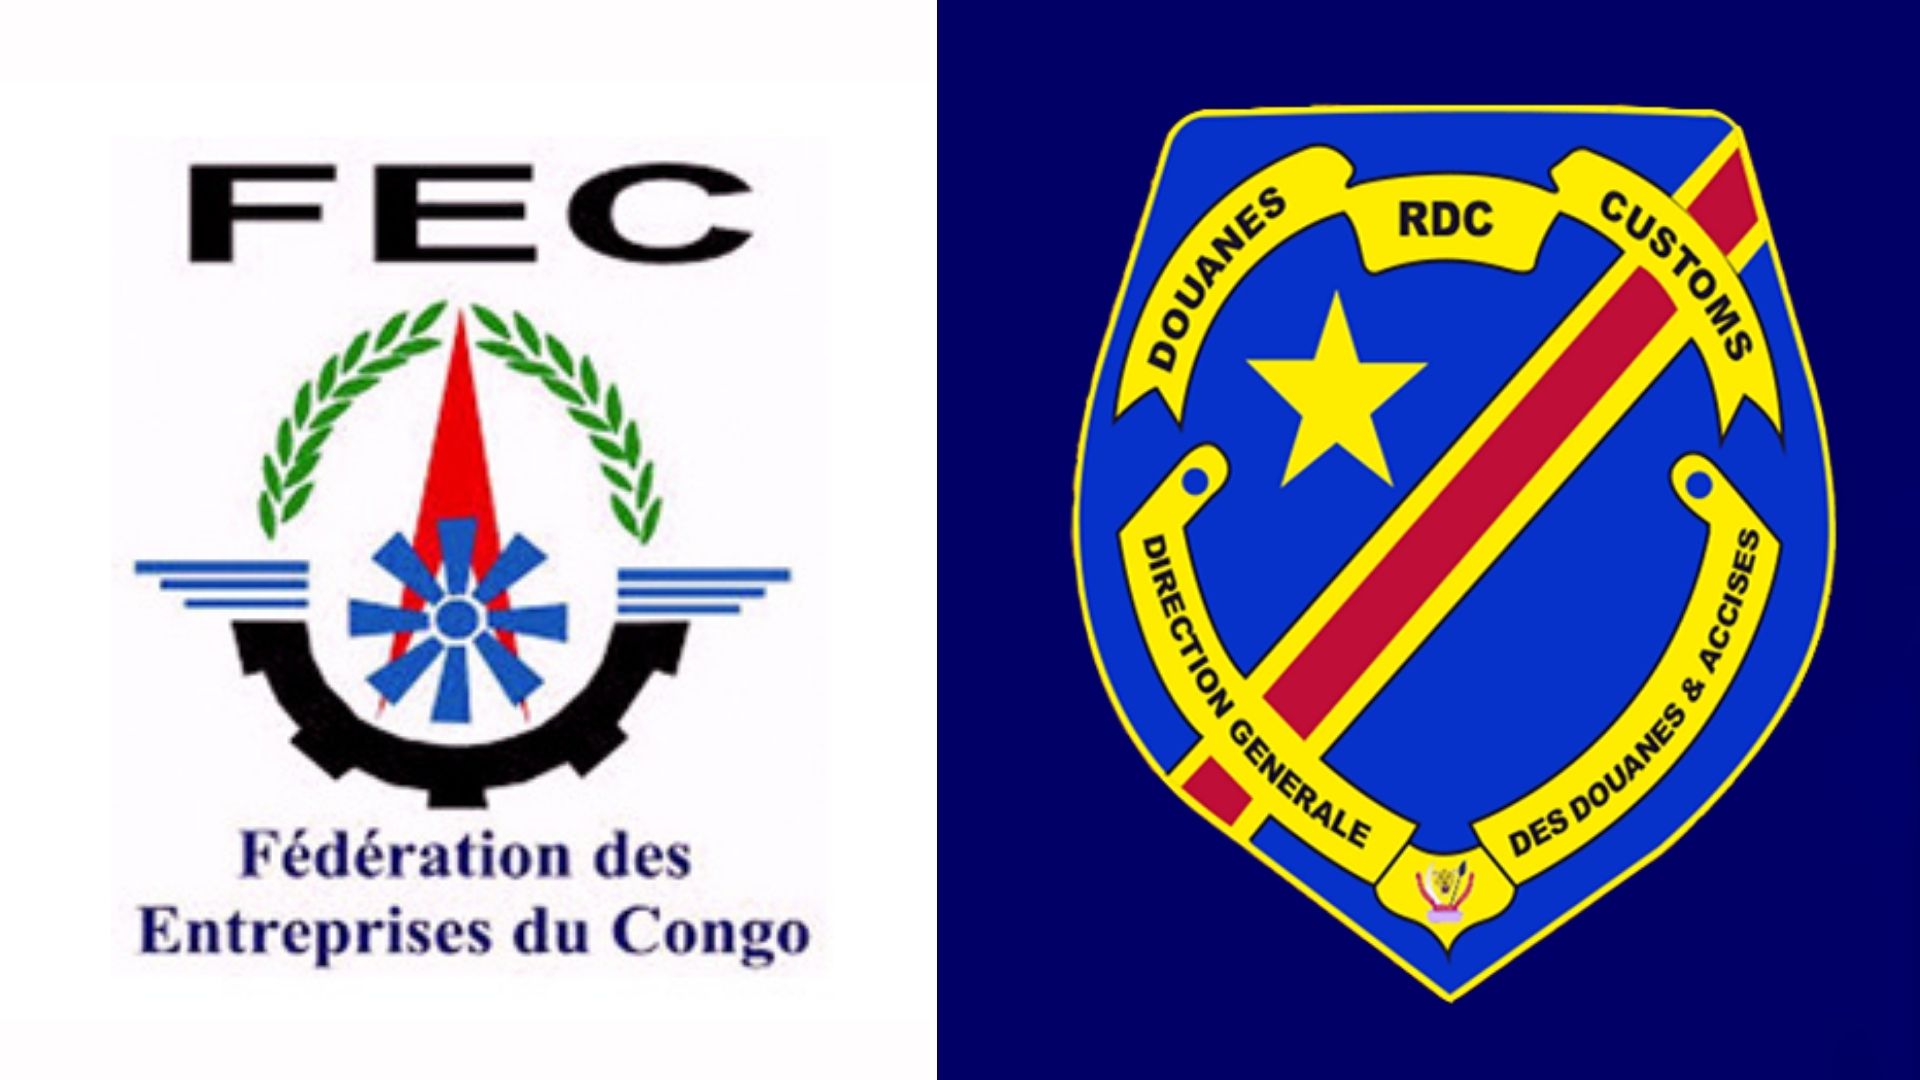 RDC lindustrie locale menacée à cause linstallation du STDA par la DGDA fustige la FEC Communiqué